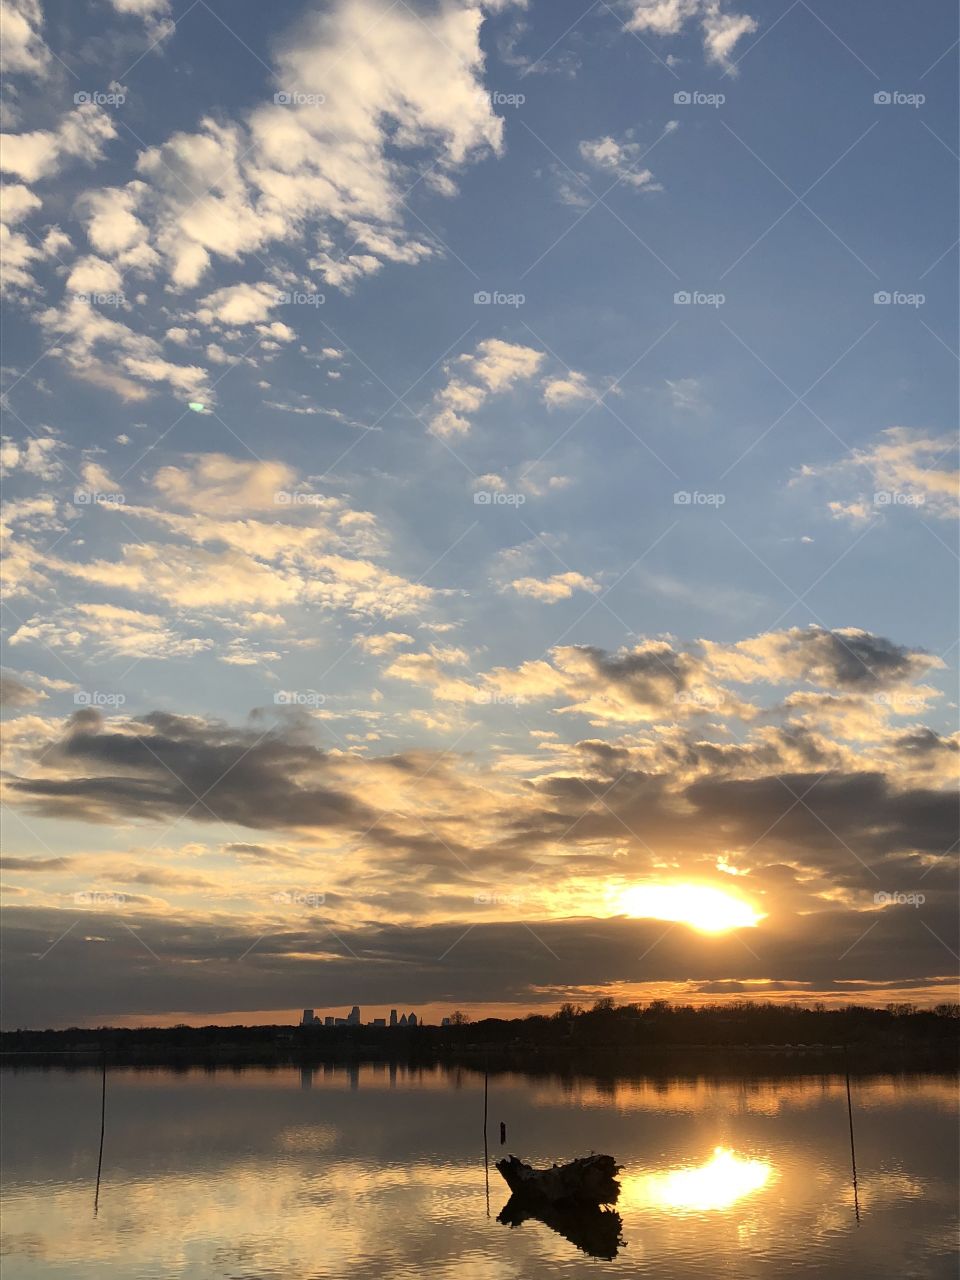 Serene sunset on a lake